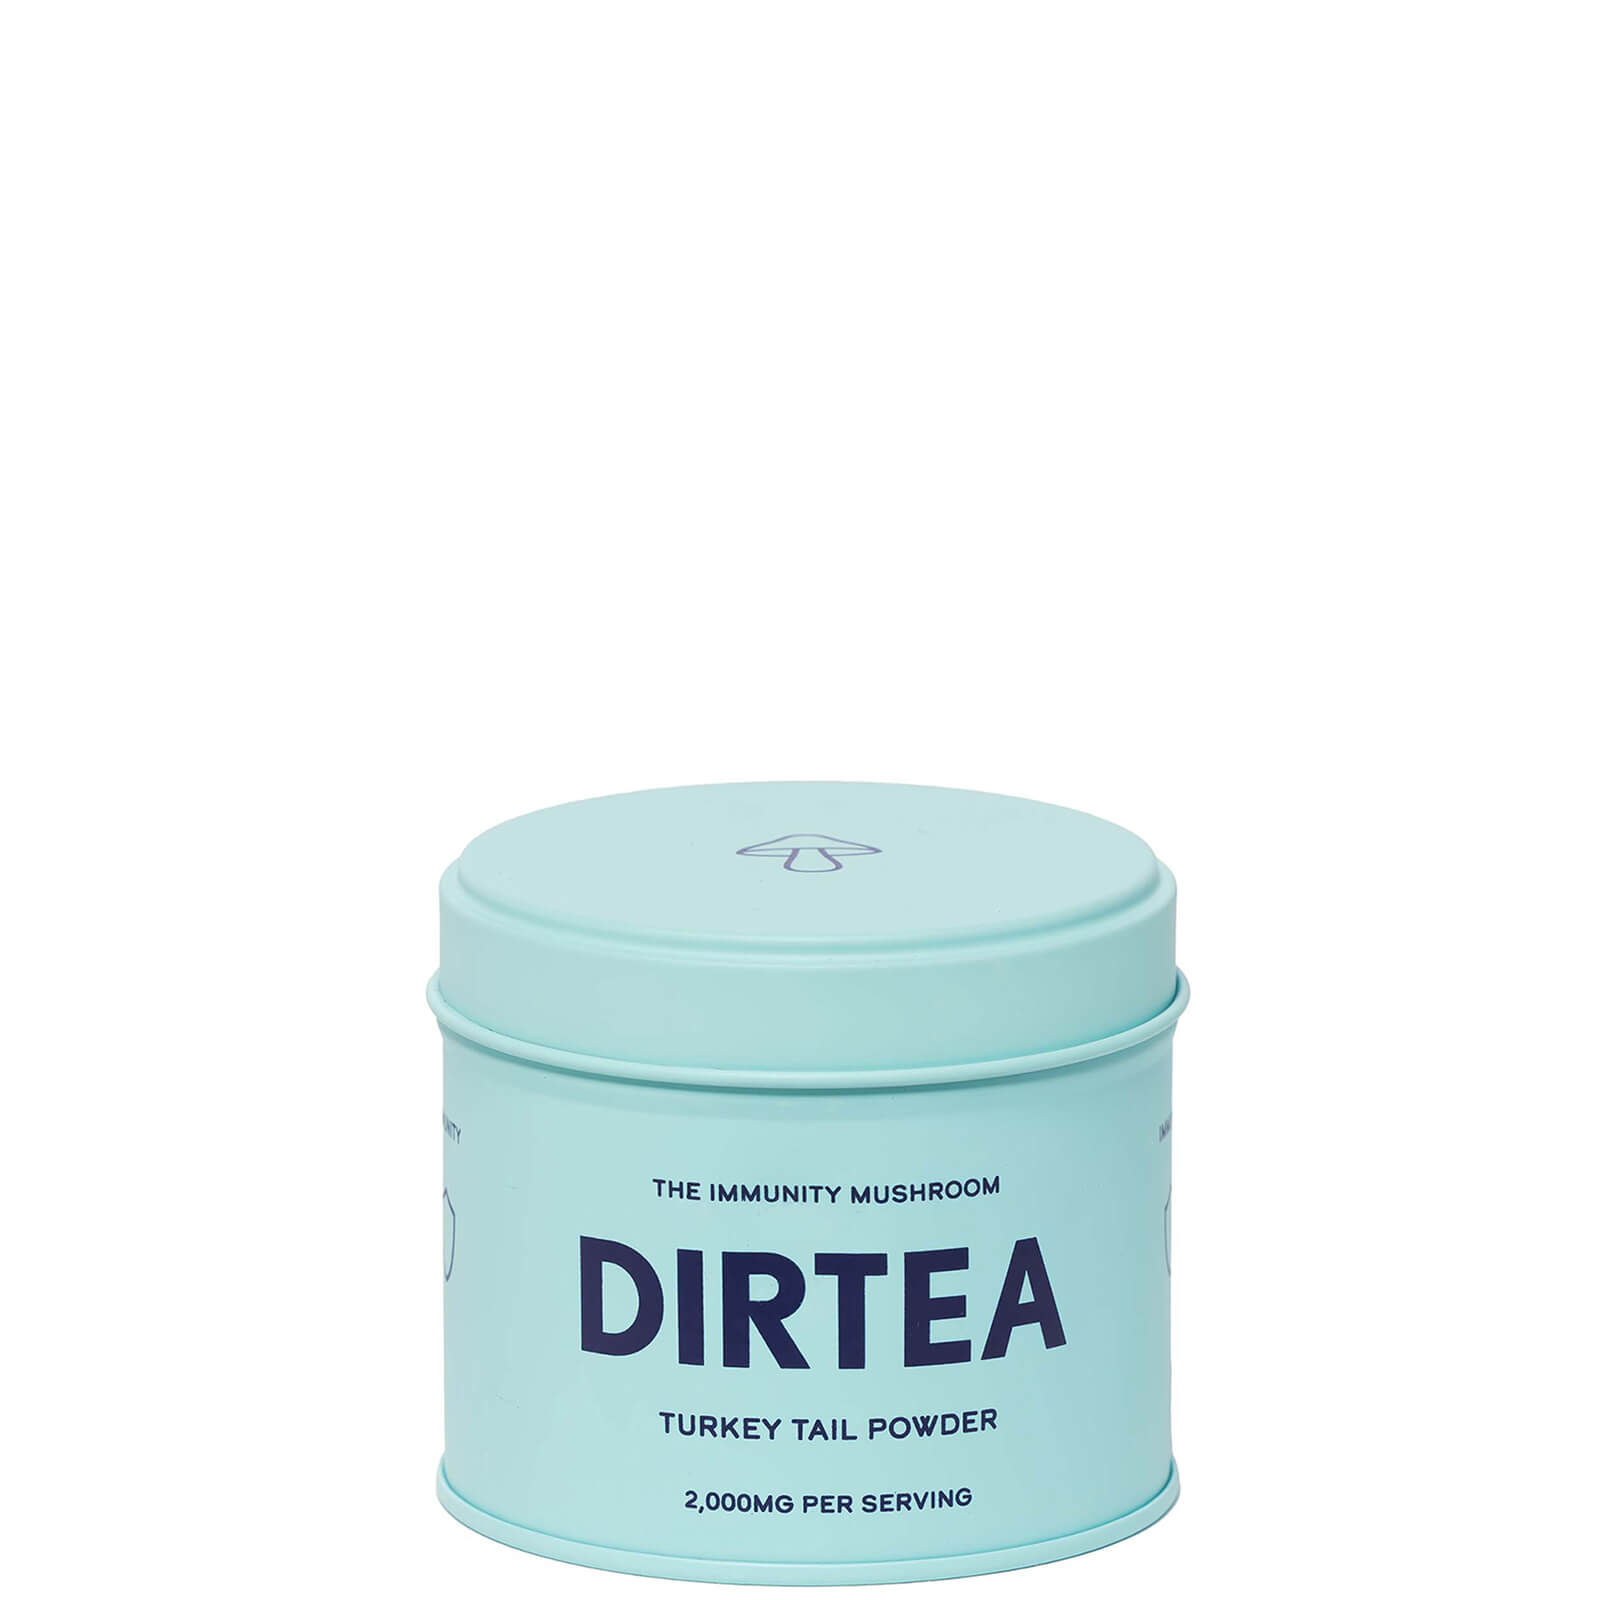 Dirtea Turkey Tail Powder - The Immunity Mushroom 60g In White